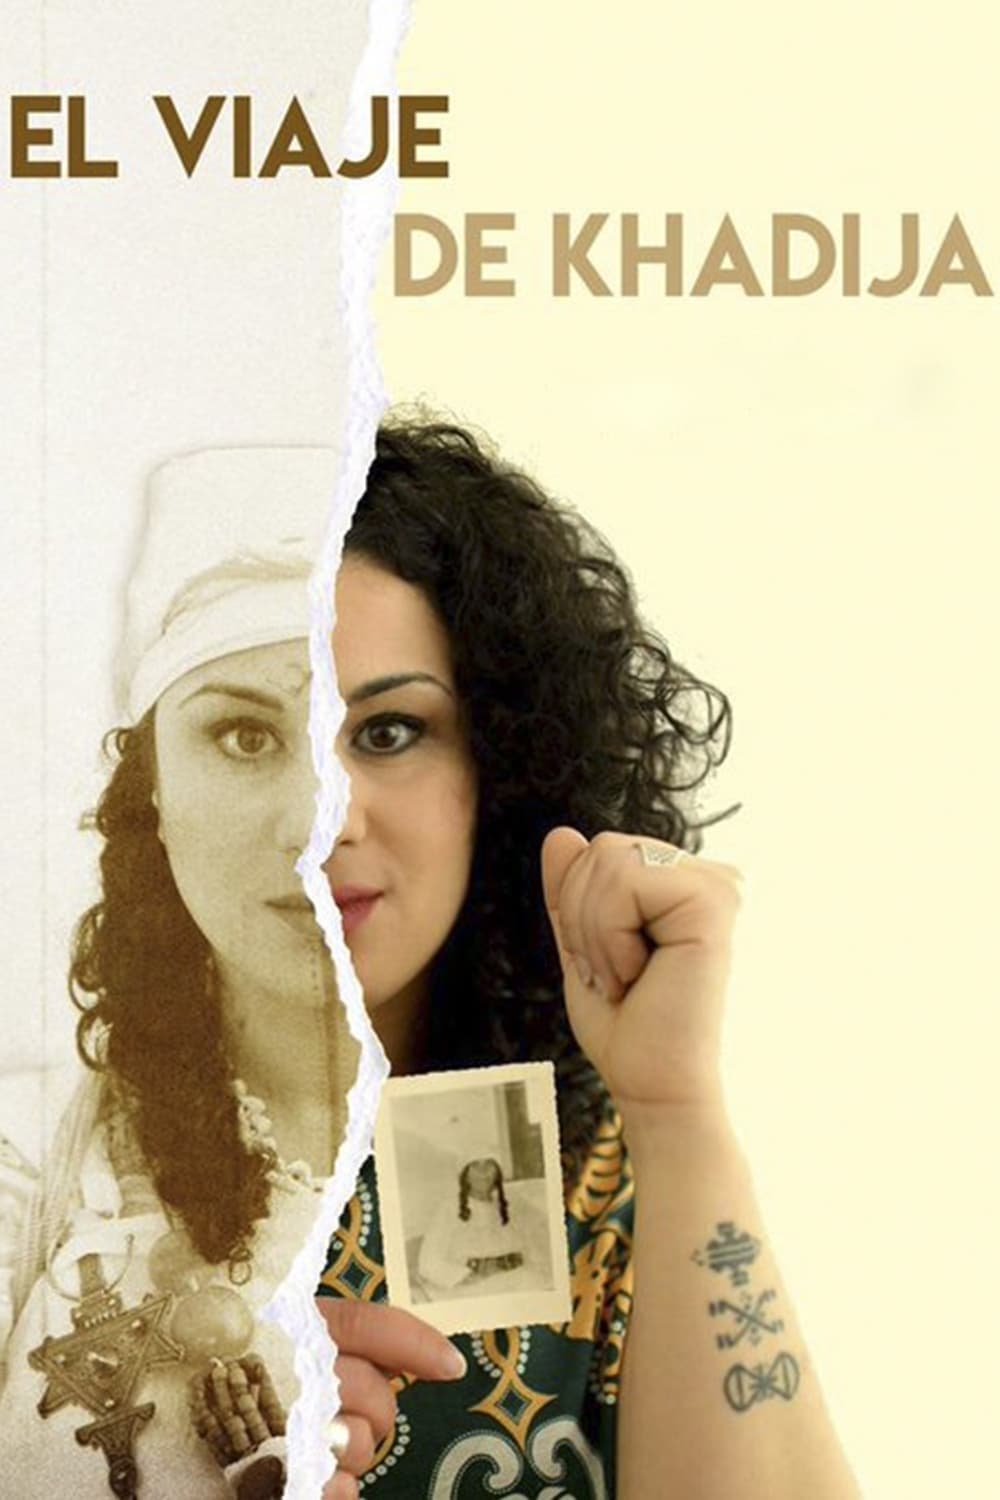 Le voyage de Khadija